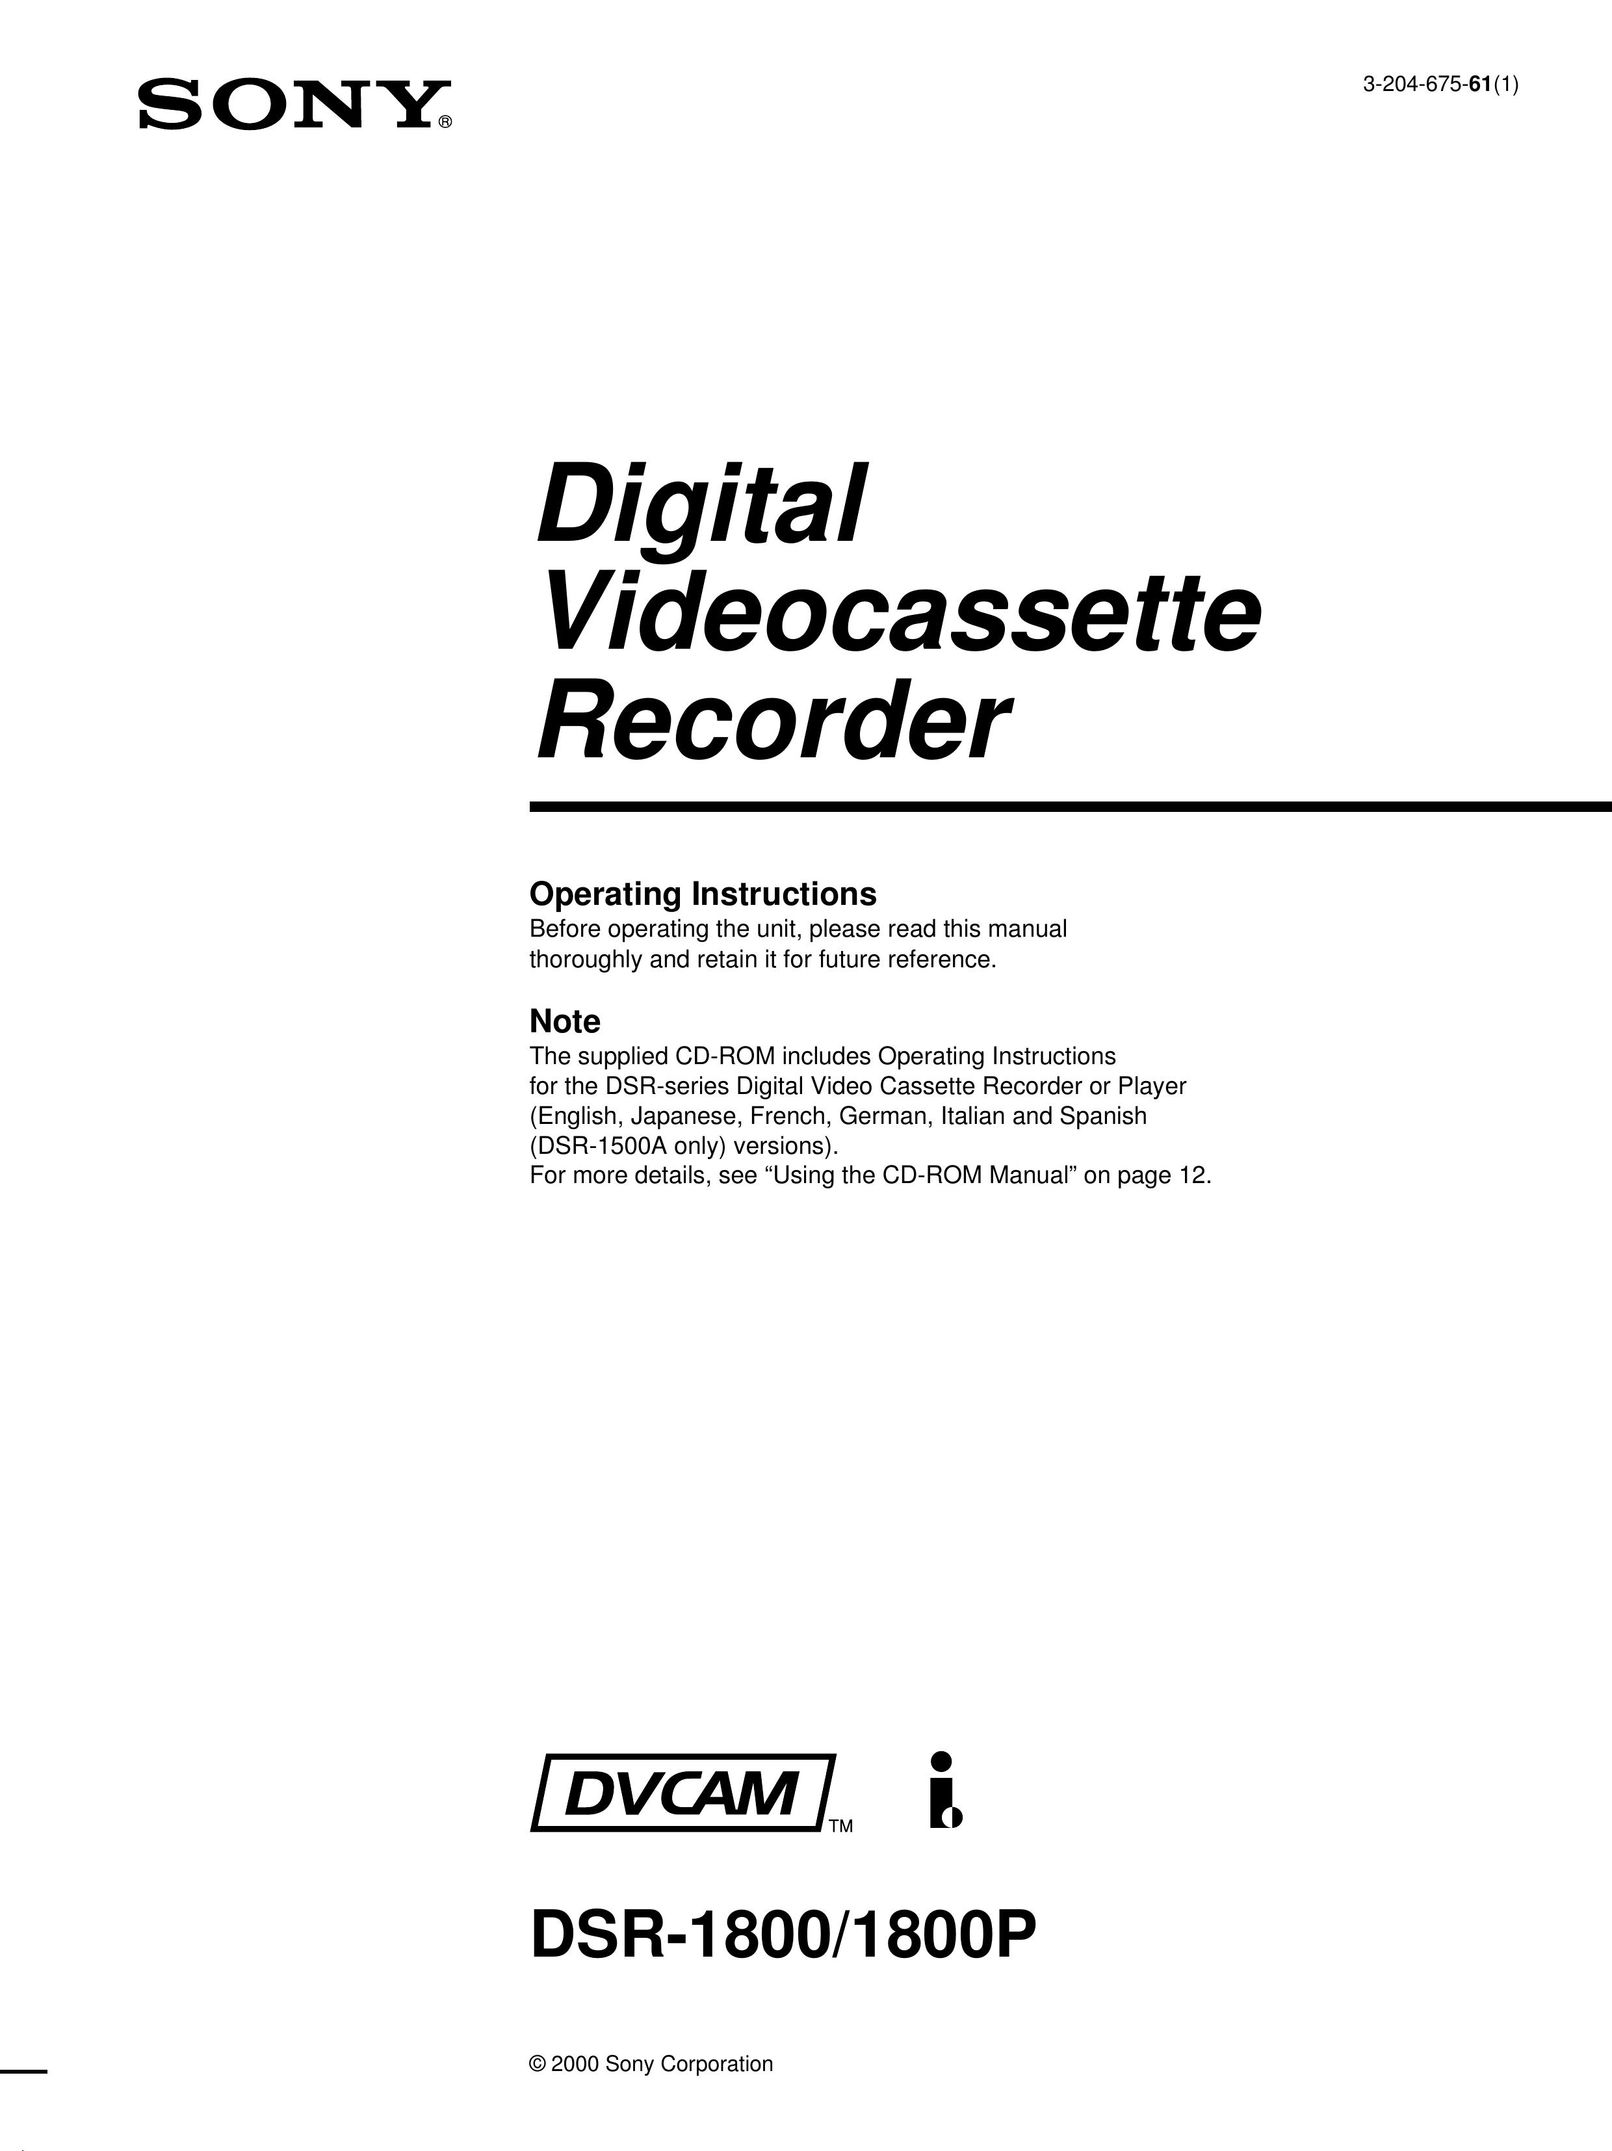 Sony DSR-1800/1800P DVD VCR Combo User Manual